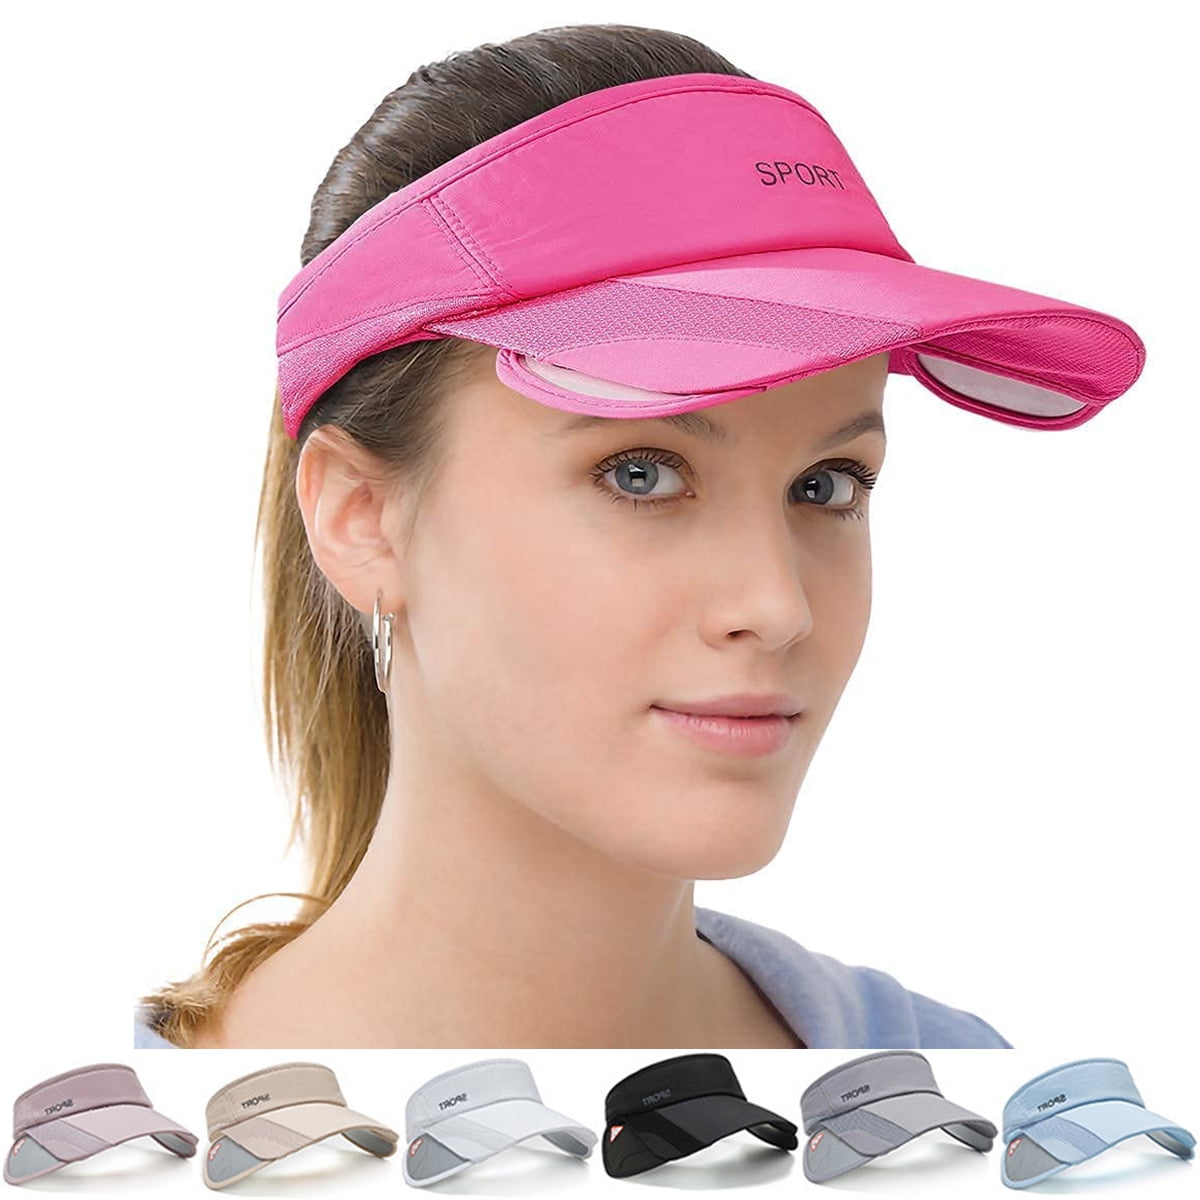 Summer Sun Visor Hat - Women Adjustable Golf Cap with Retractable Brim, UV  Protection Beach/Tennis Sport Hat